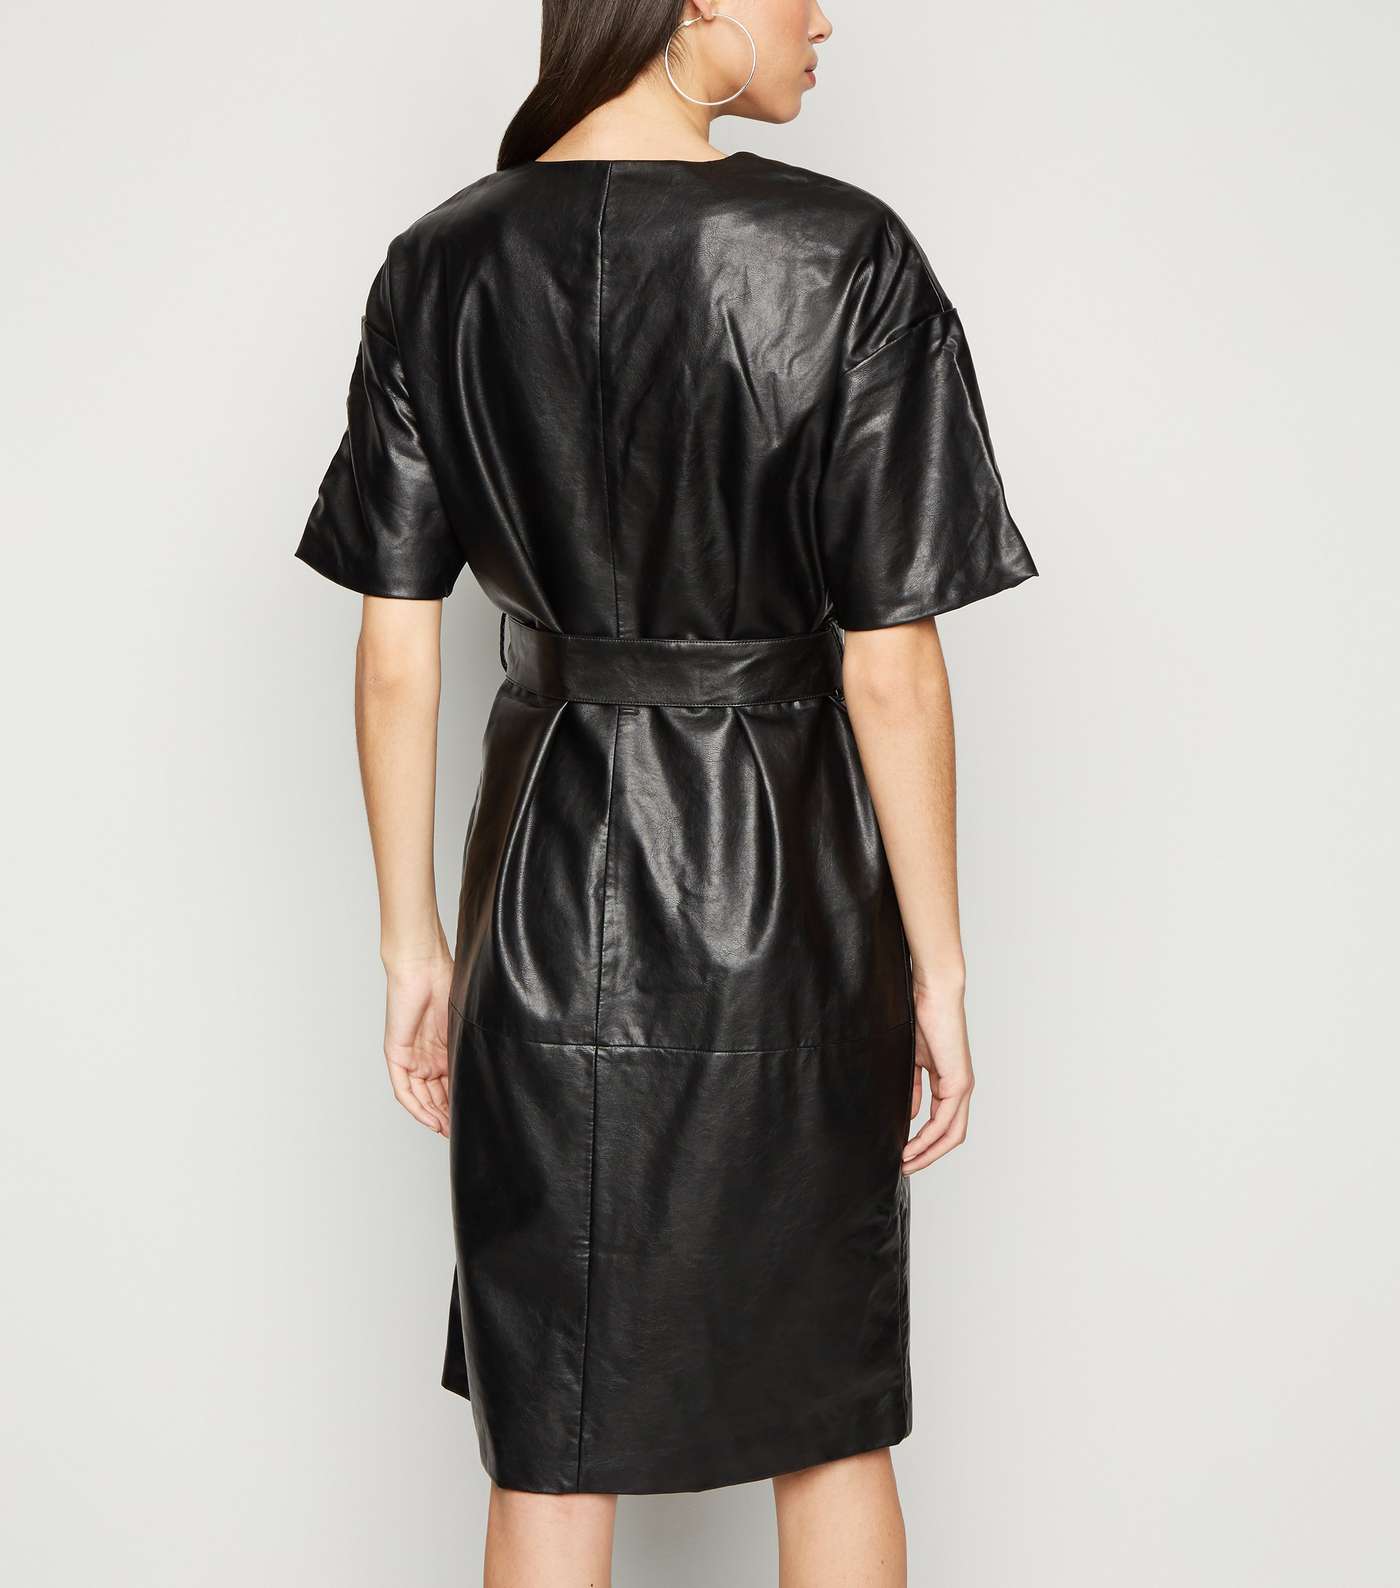 NA-KD Black Coated Leather-Look Belted Dress Image 3